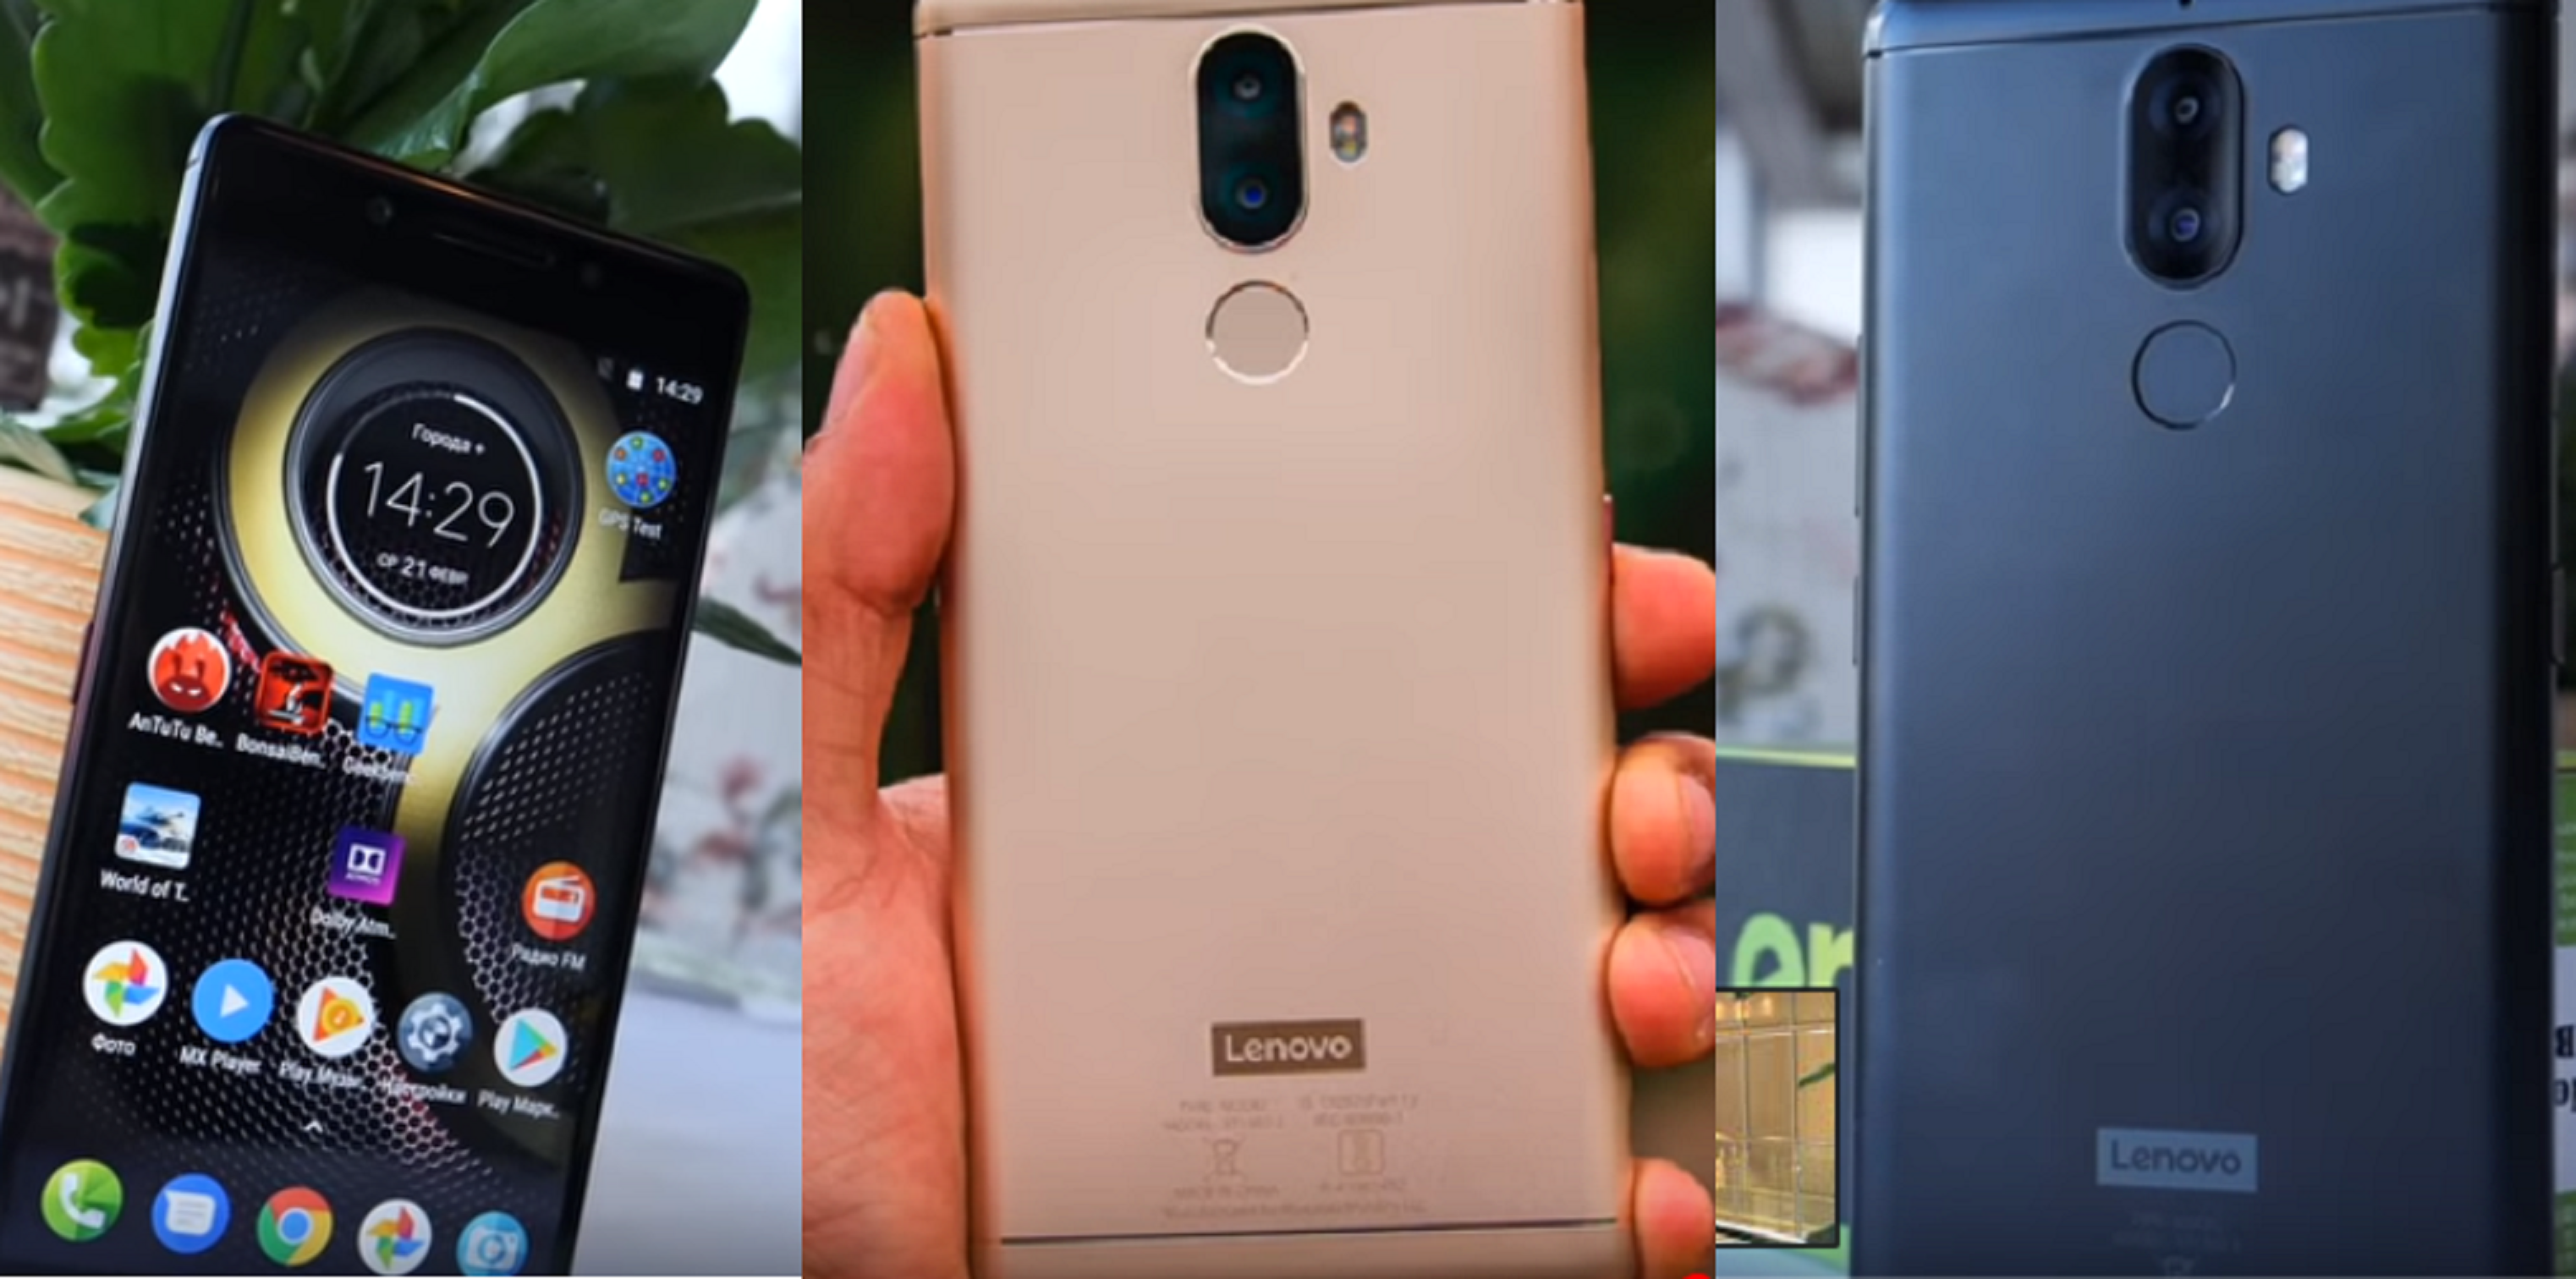 Lenovo K8 Note 64 GB smarttelefon - fordeler og ulemper